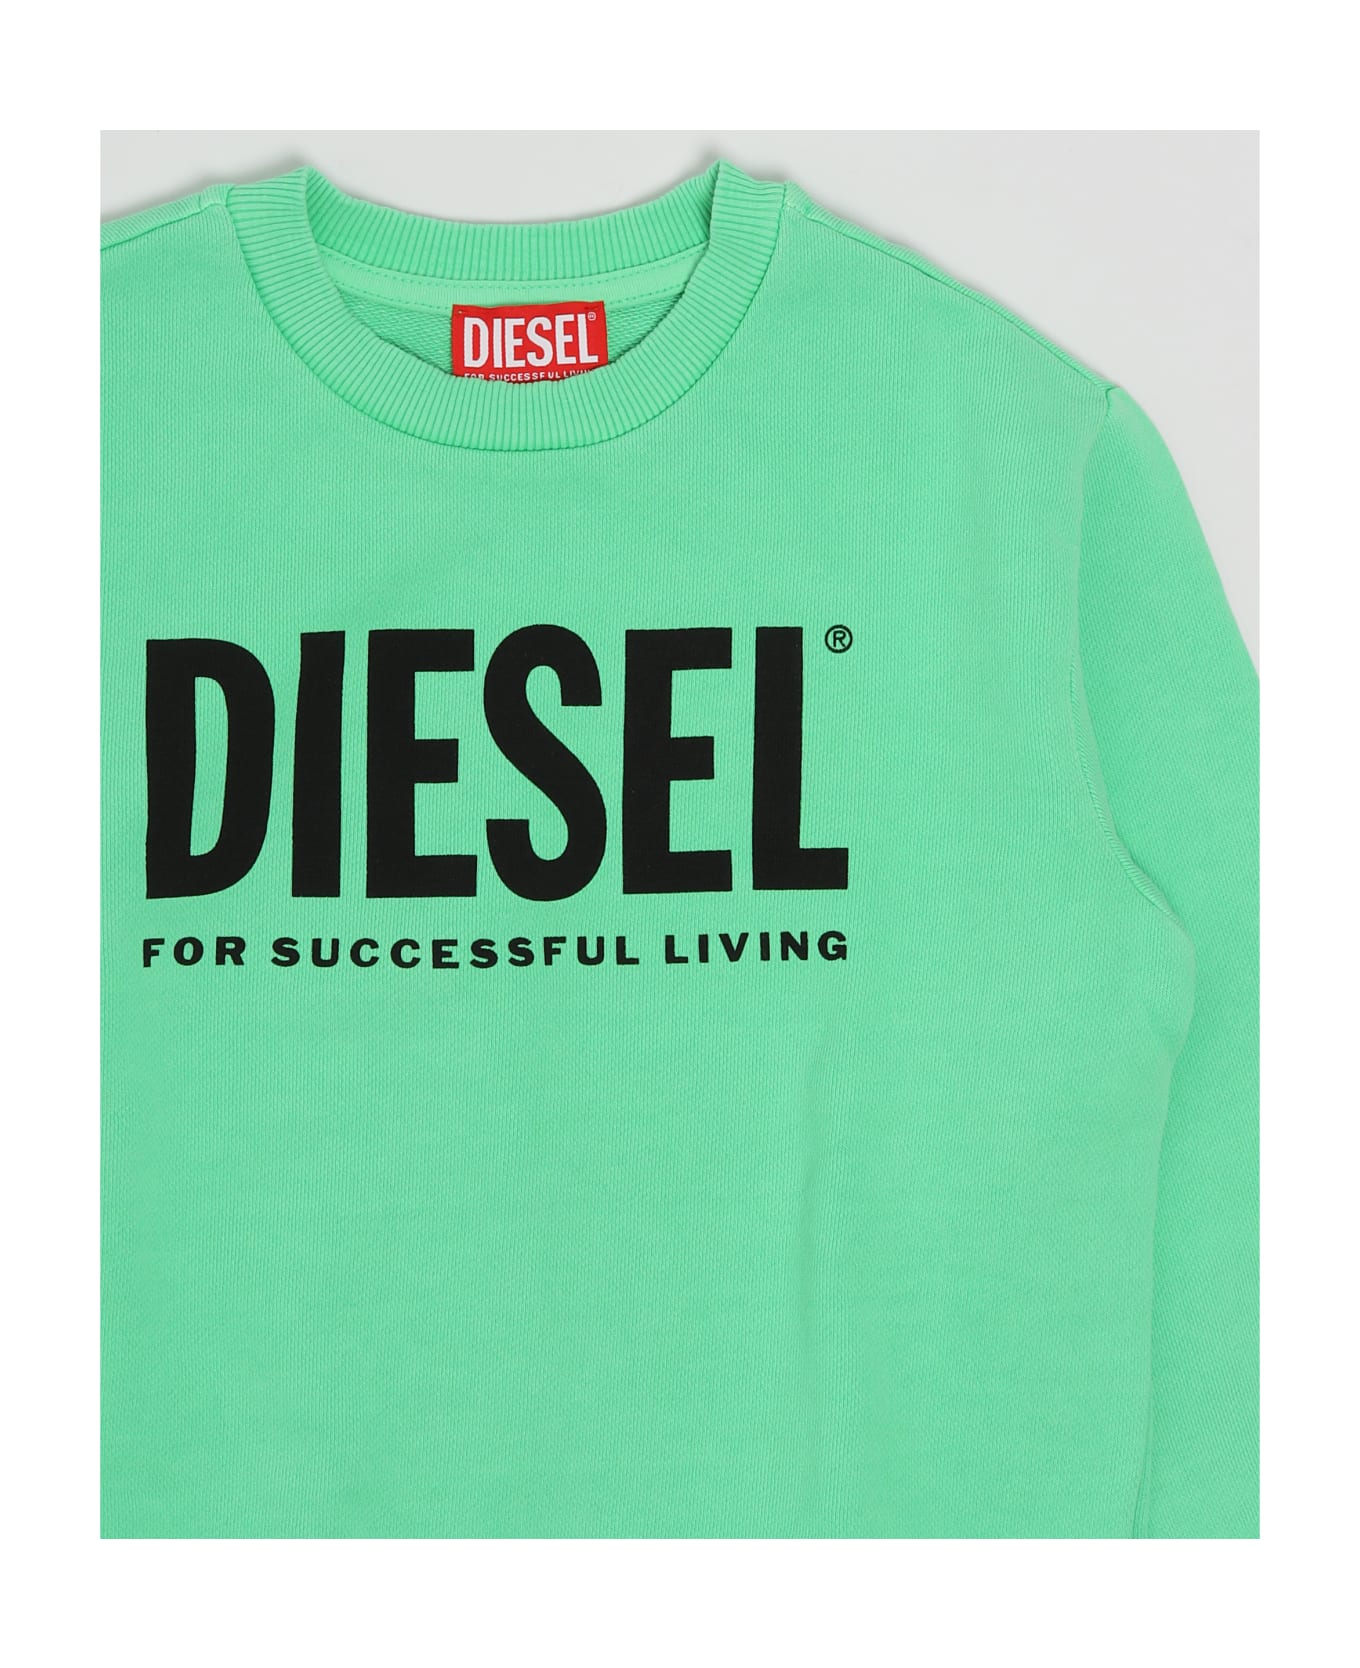 Diesel Snuci Sweatshirt Sweatshirt - VERDE FLUO